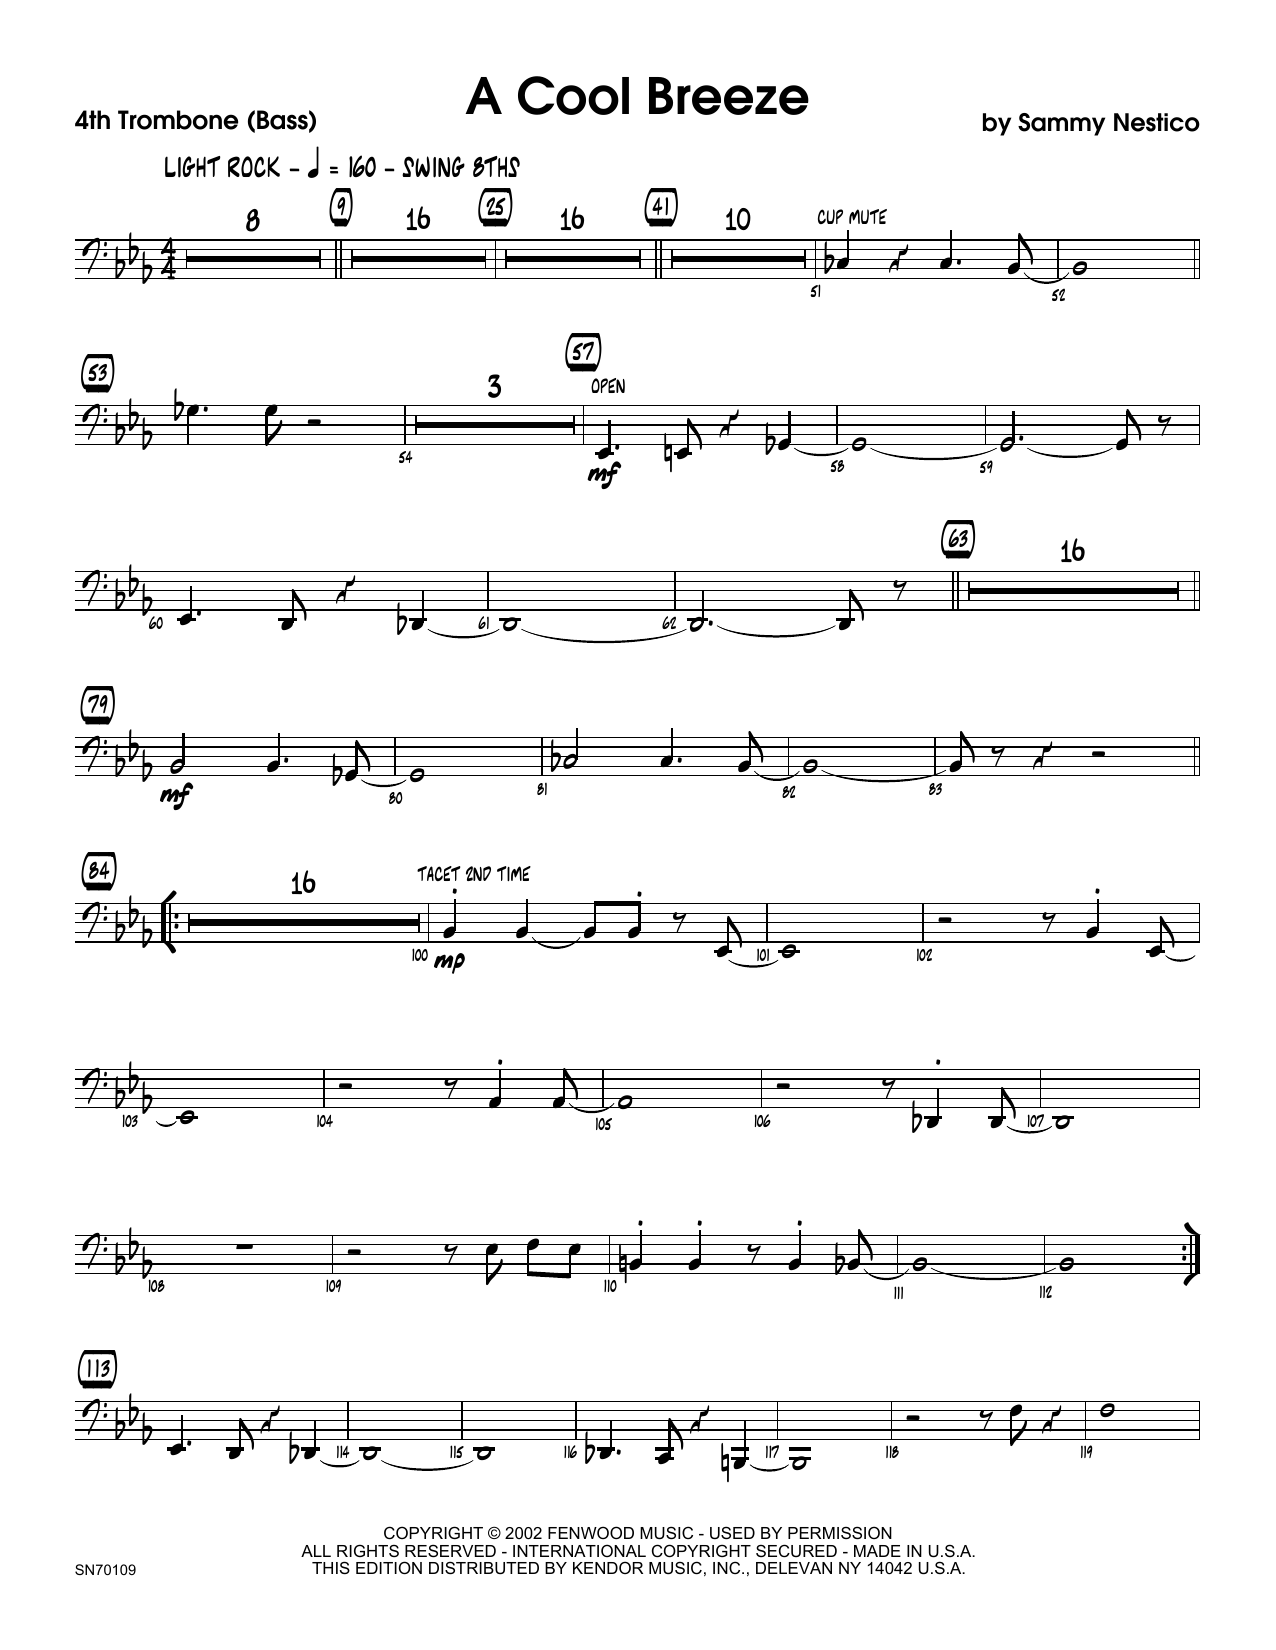 Download Sammy Nestico A Cool Breeze - 4th Trombone Sheet Music